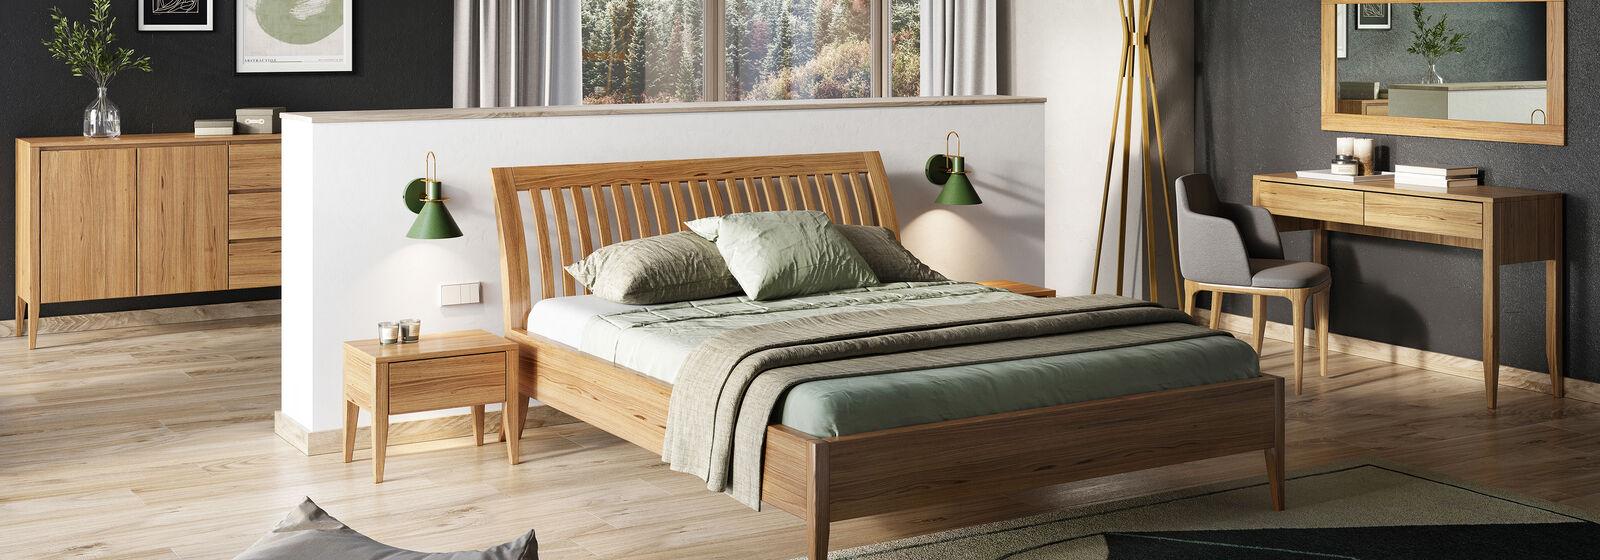 Schlafzimmer 3tlg. Set Bett Massivholz Möbel Nachttische 2x Betten Echtes Holz